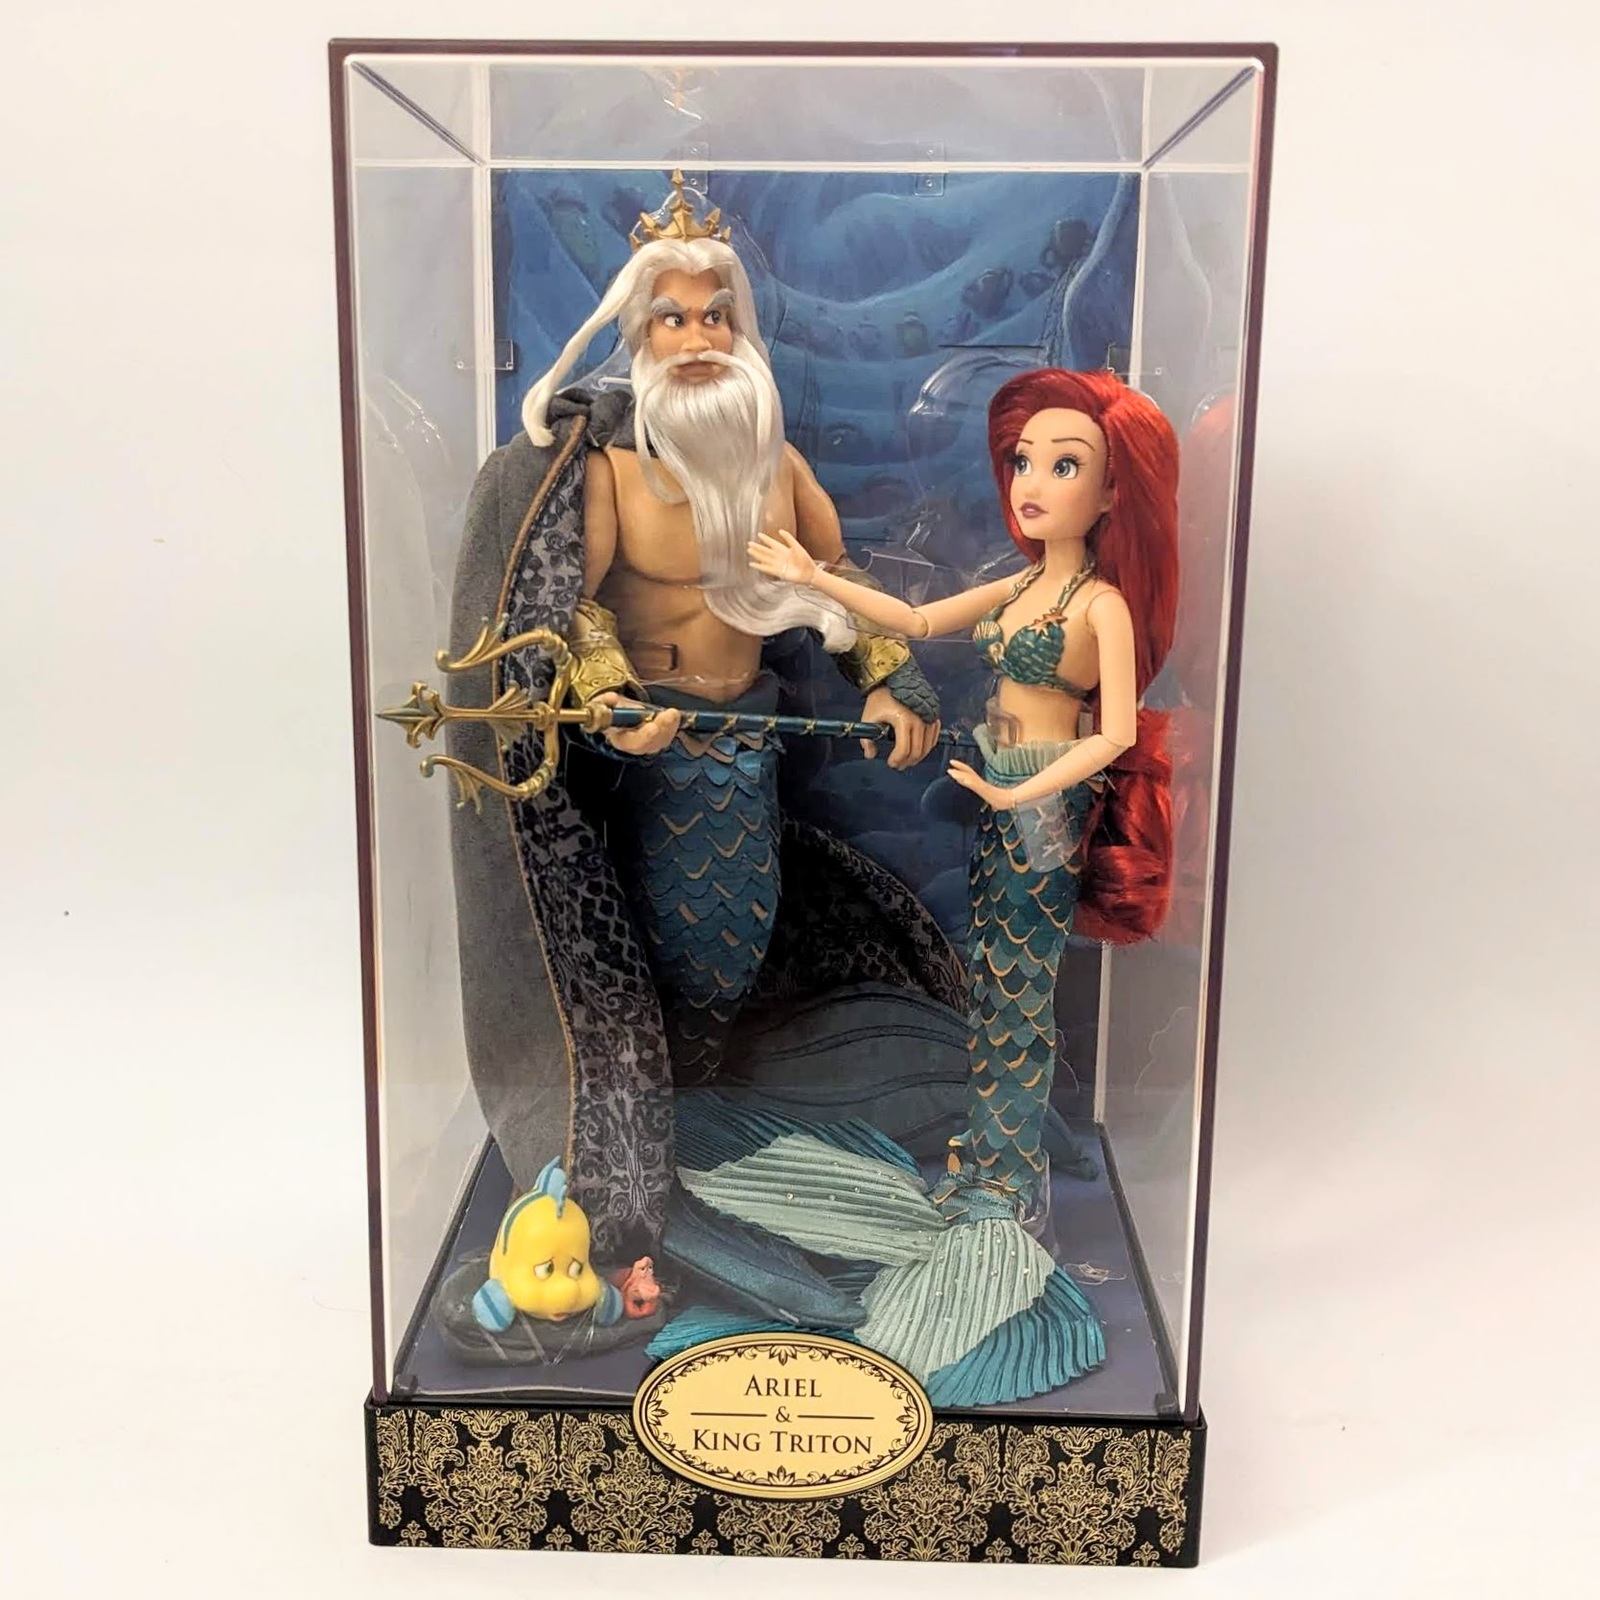 Primary image for Little Mermaid Disney Folklore Designer Doll: King Triton, Ariel, Flounder (p)